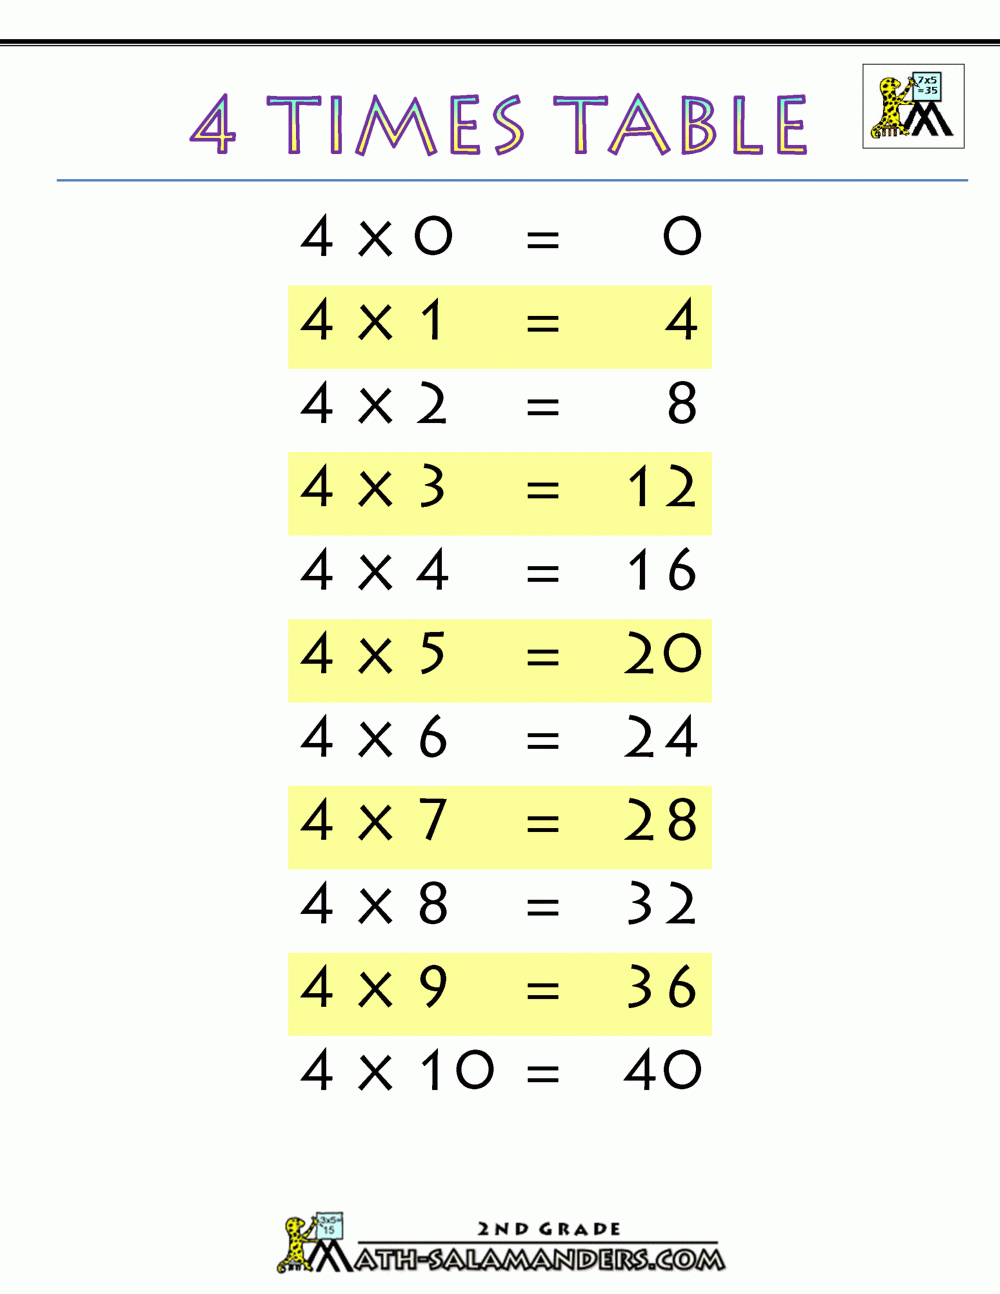  Multiplication Worksheets 4 Times Tables PrintableMultiplication